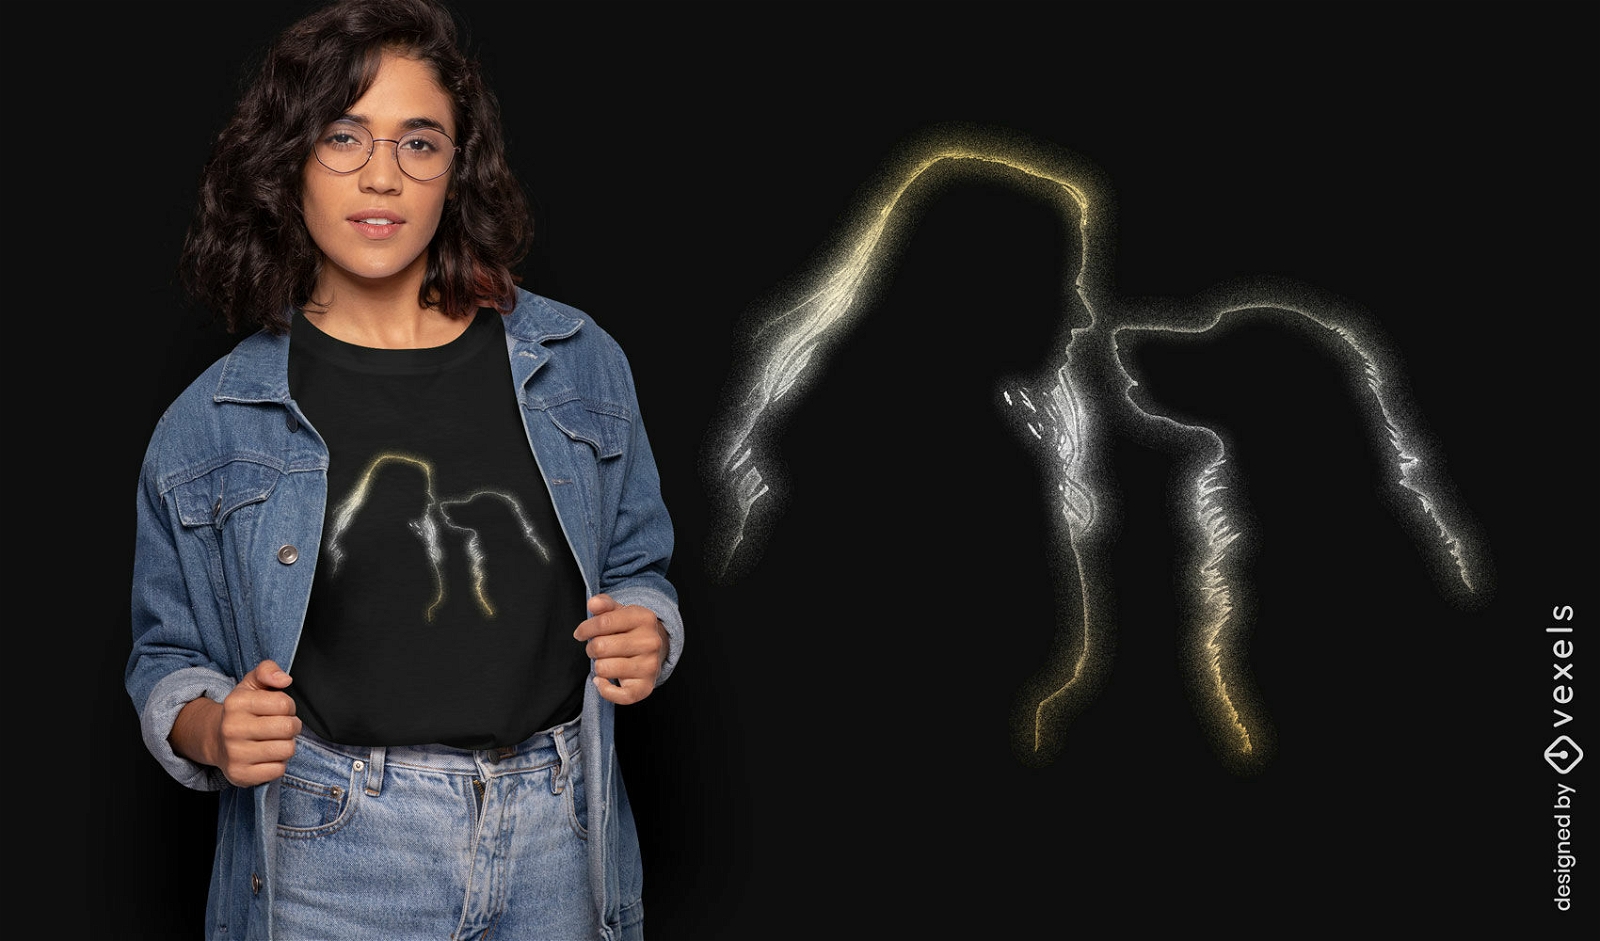 Girl and golden retriever silhouette t-shirt design